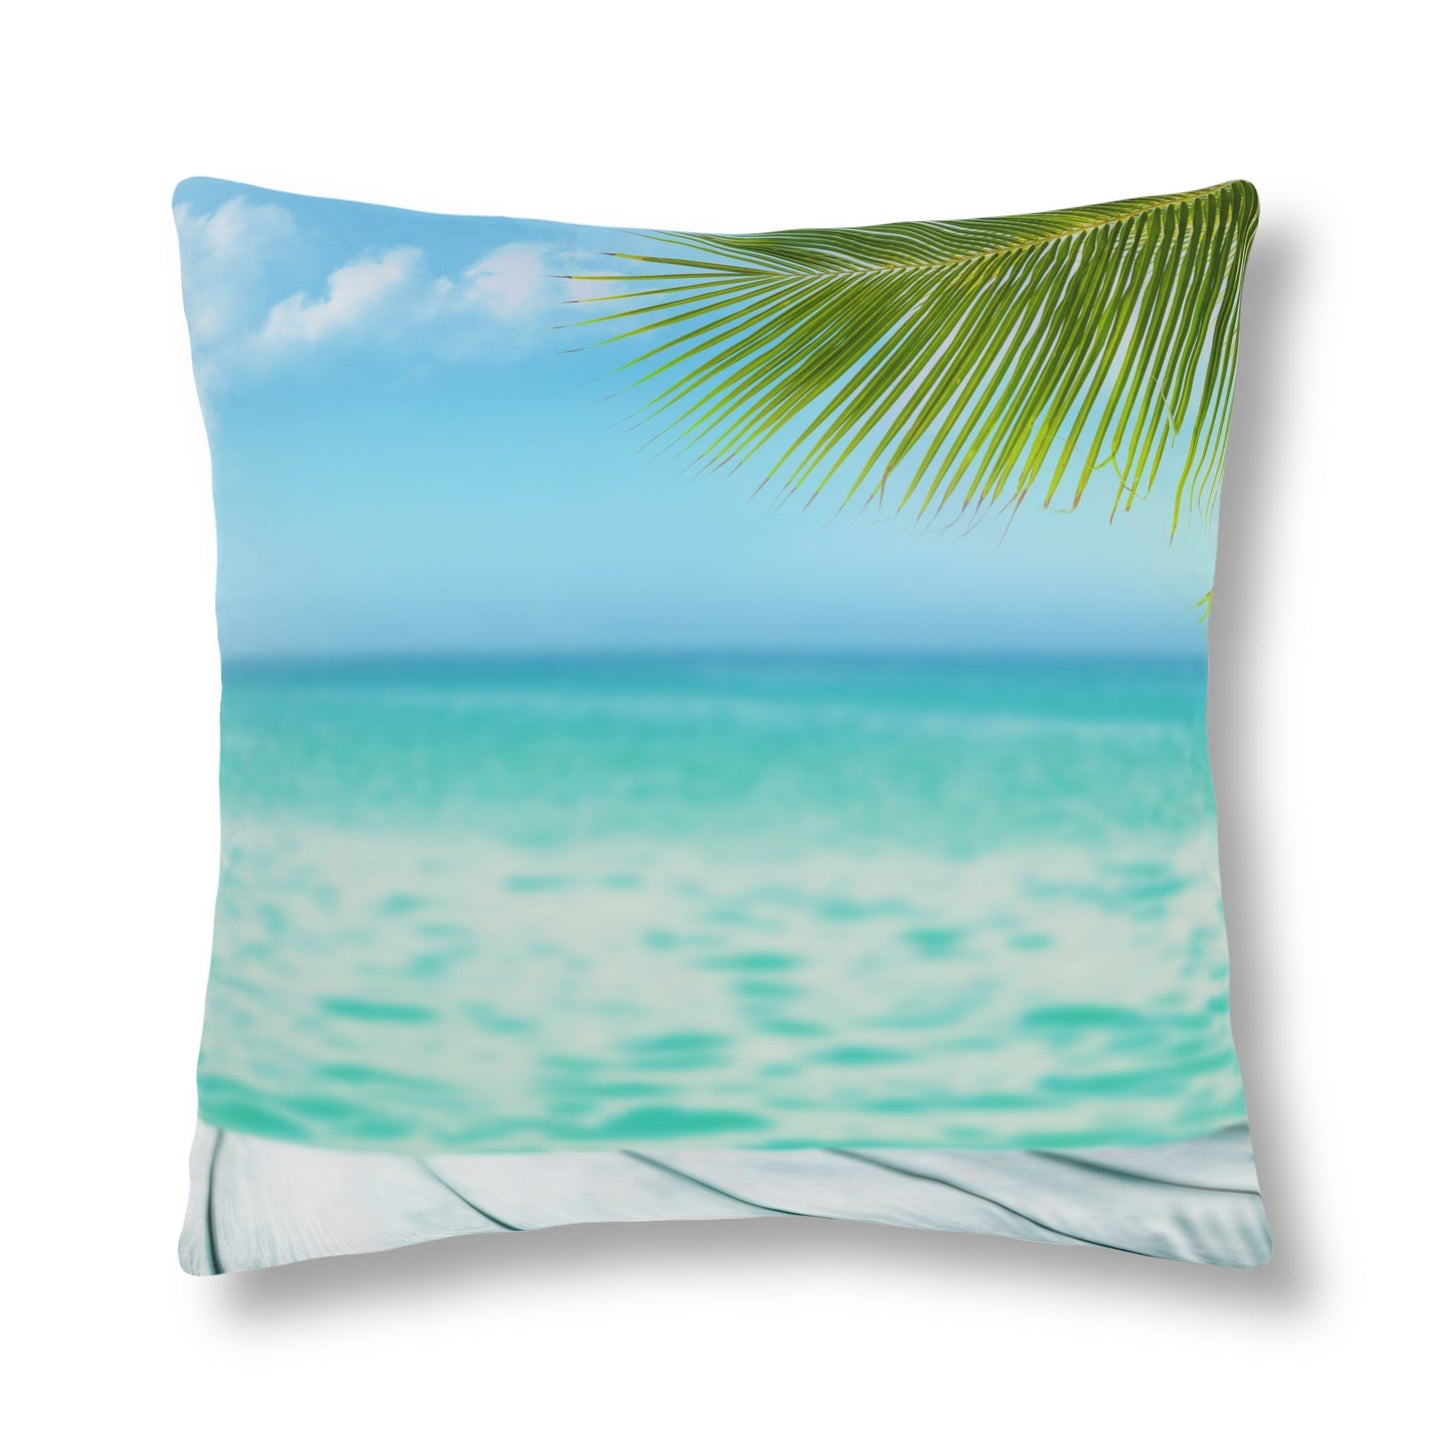 Home Decor - Summer Time Waterproof Pillows Each Side Different Design